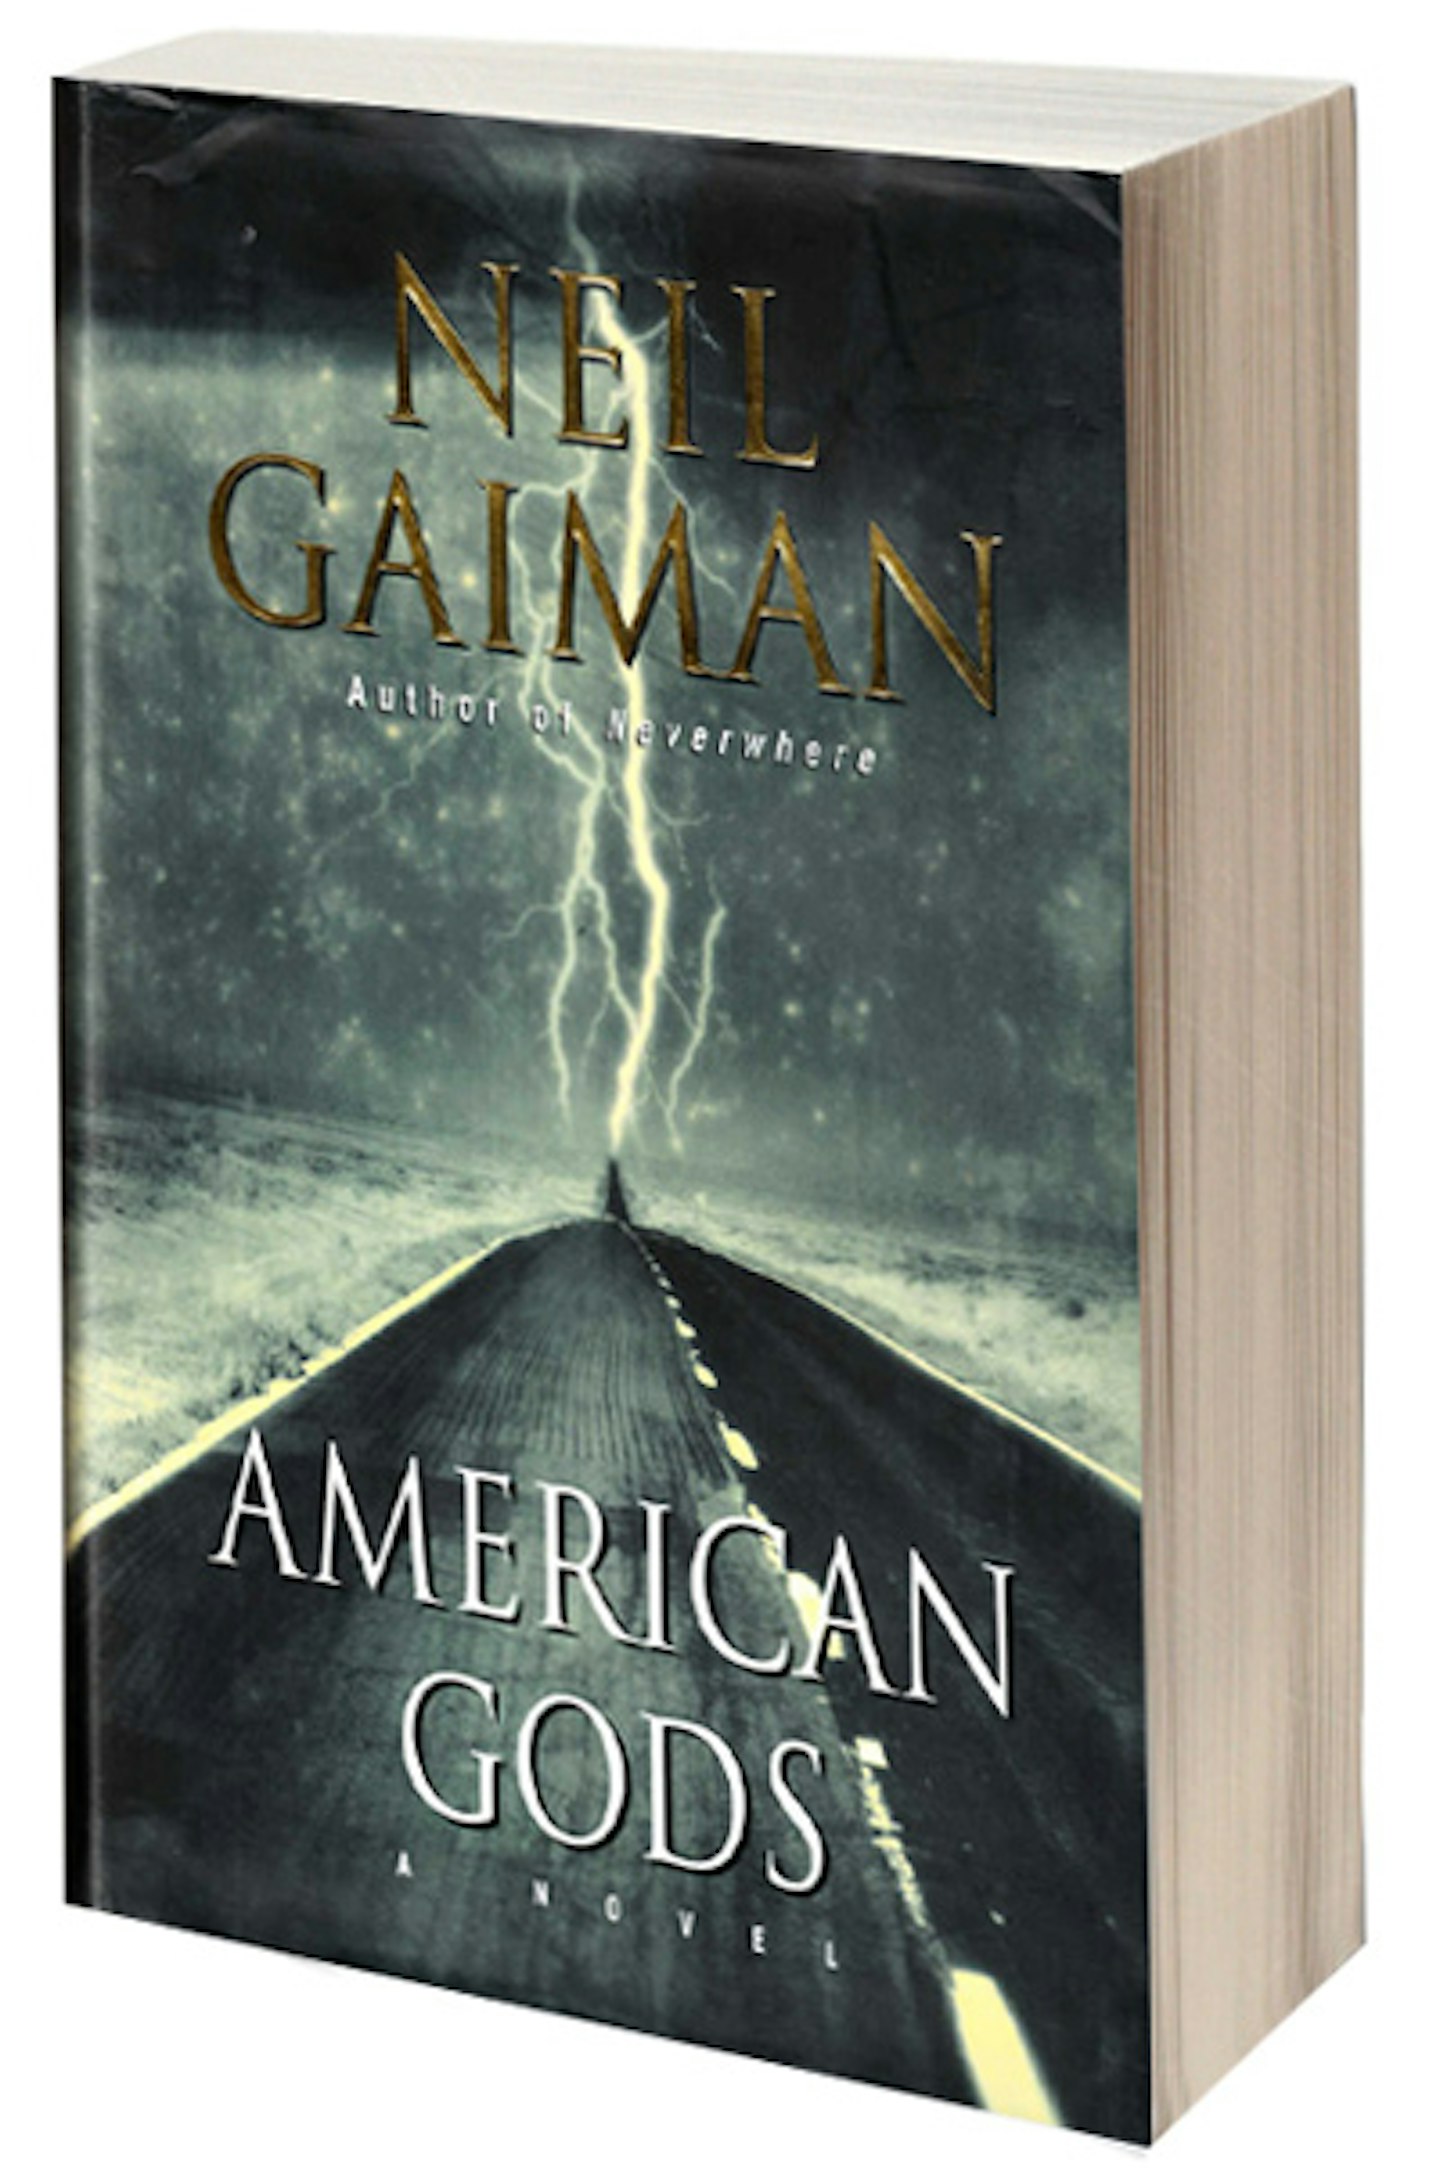 Neil Gaiman American Gods book cover